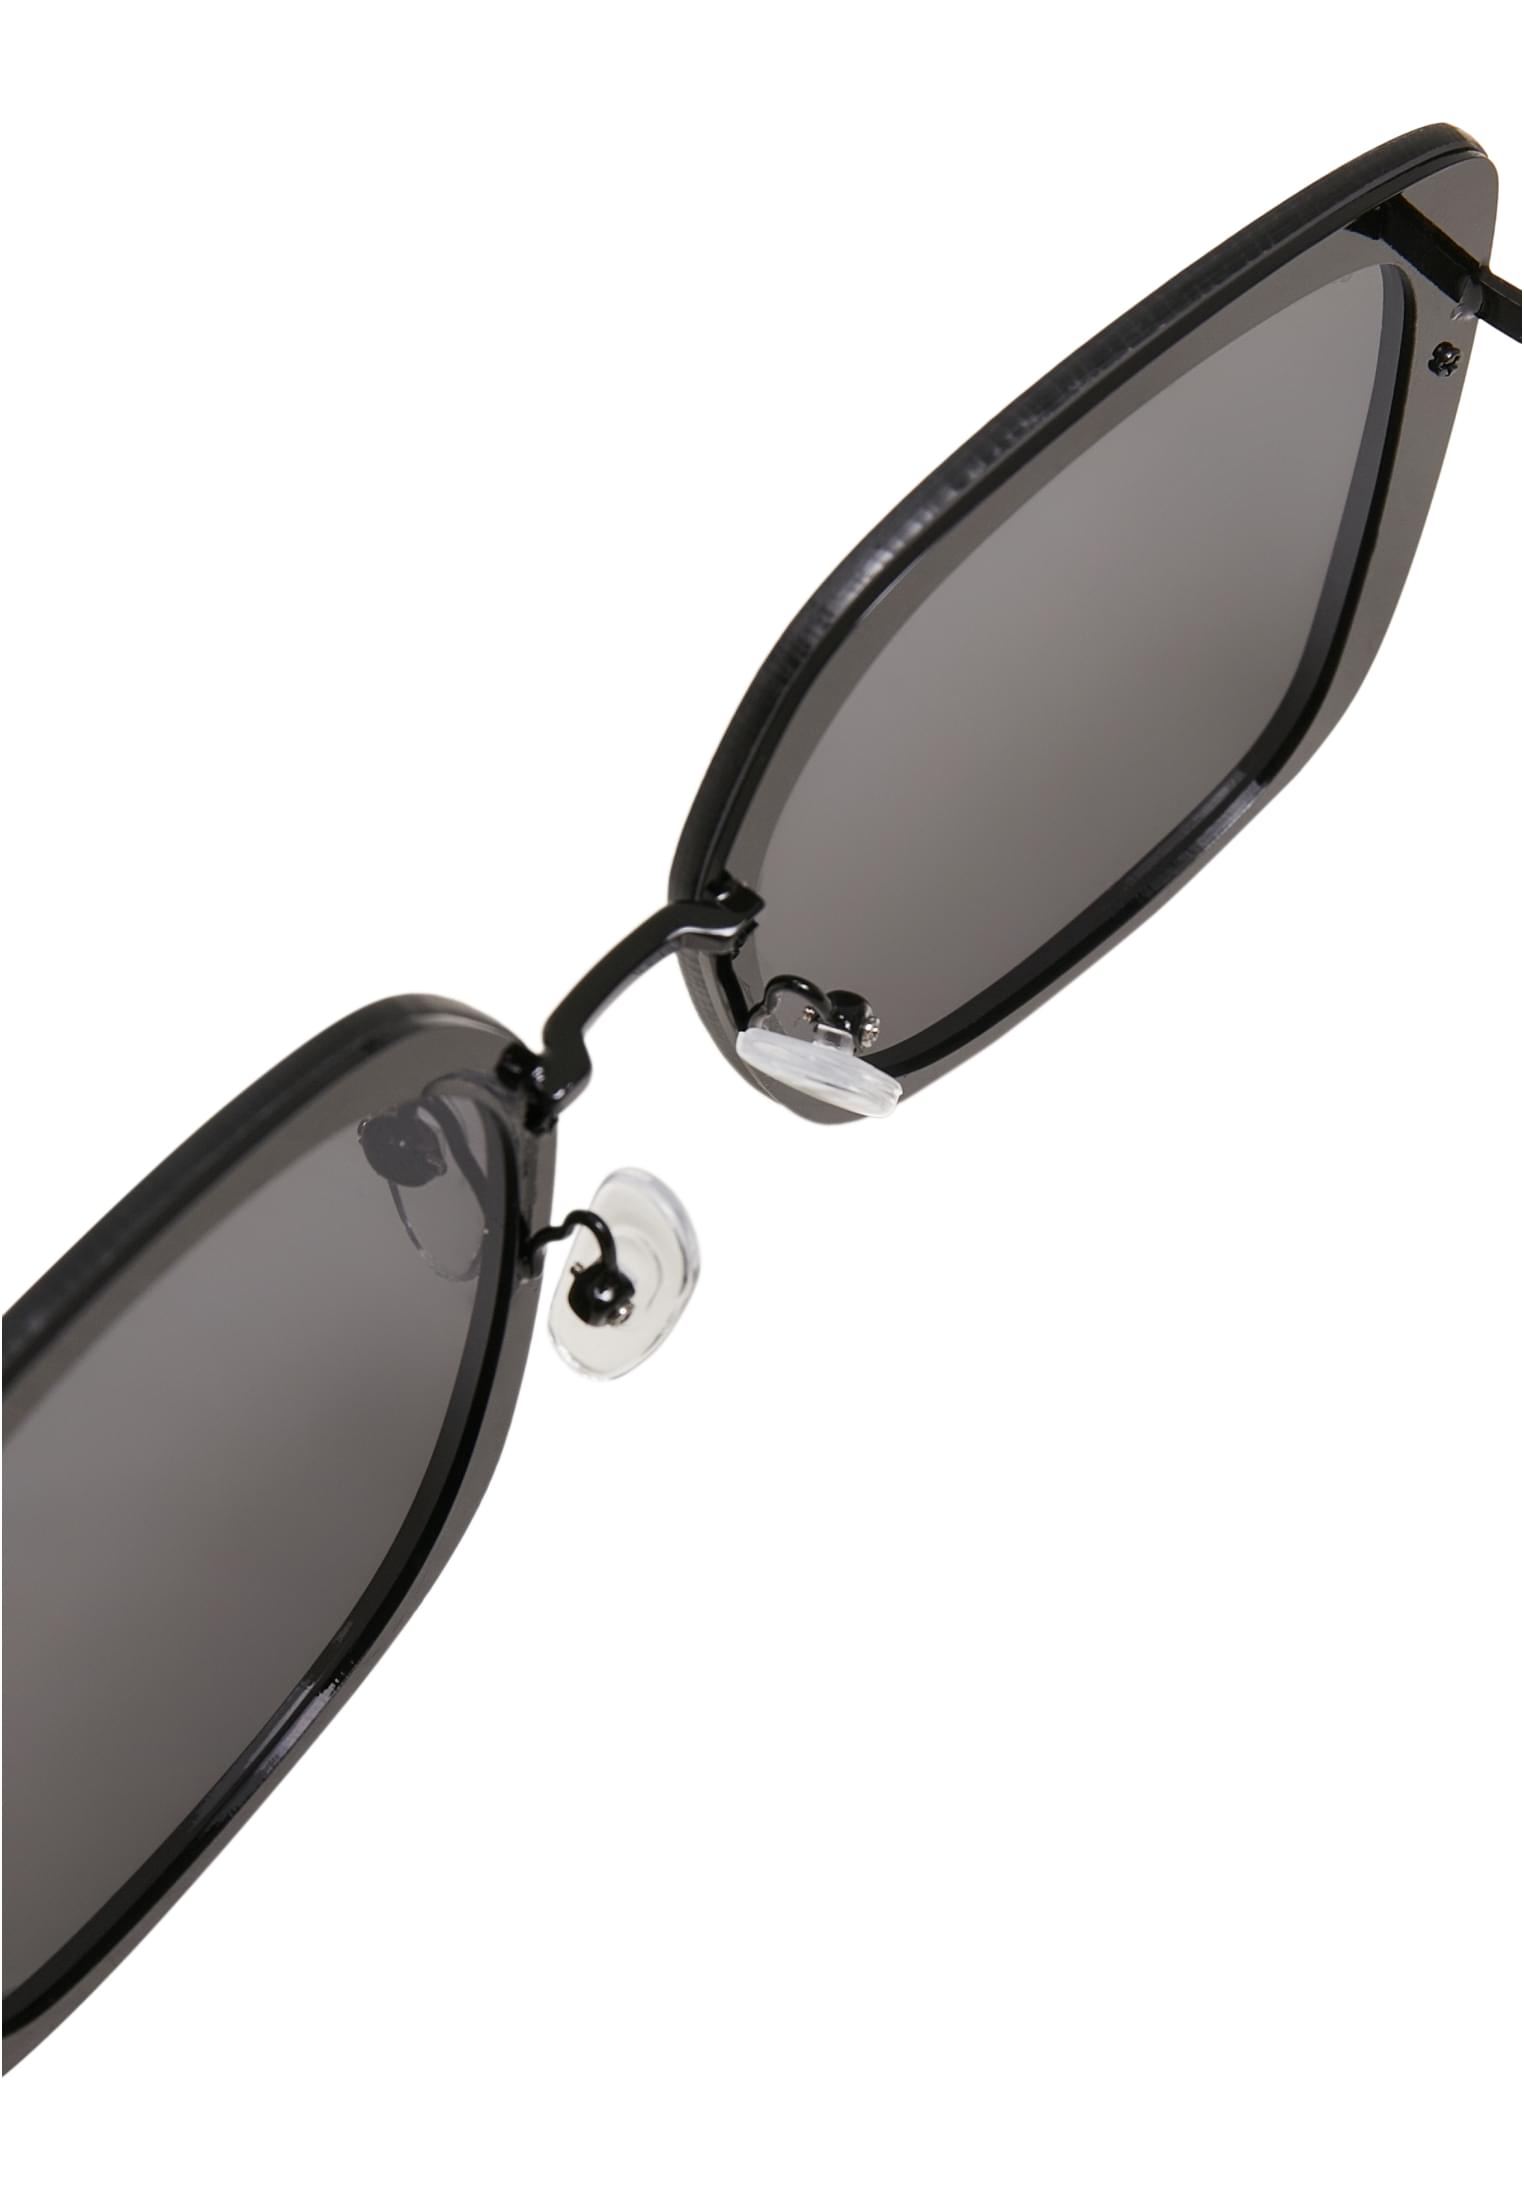 Sonnenbrillen Sunglasses December UC in Farbe black